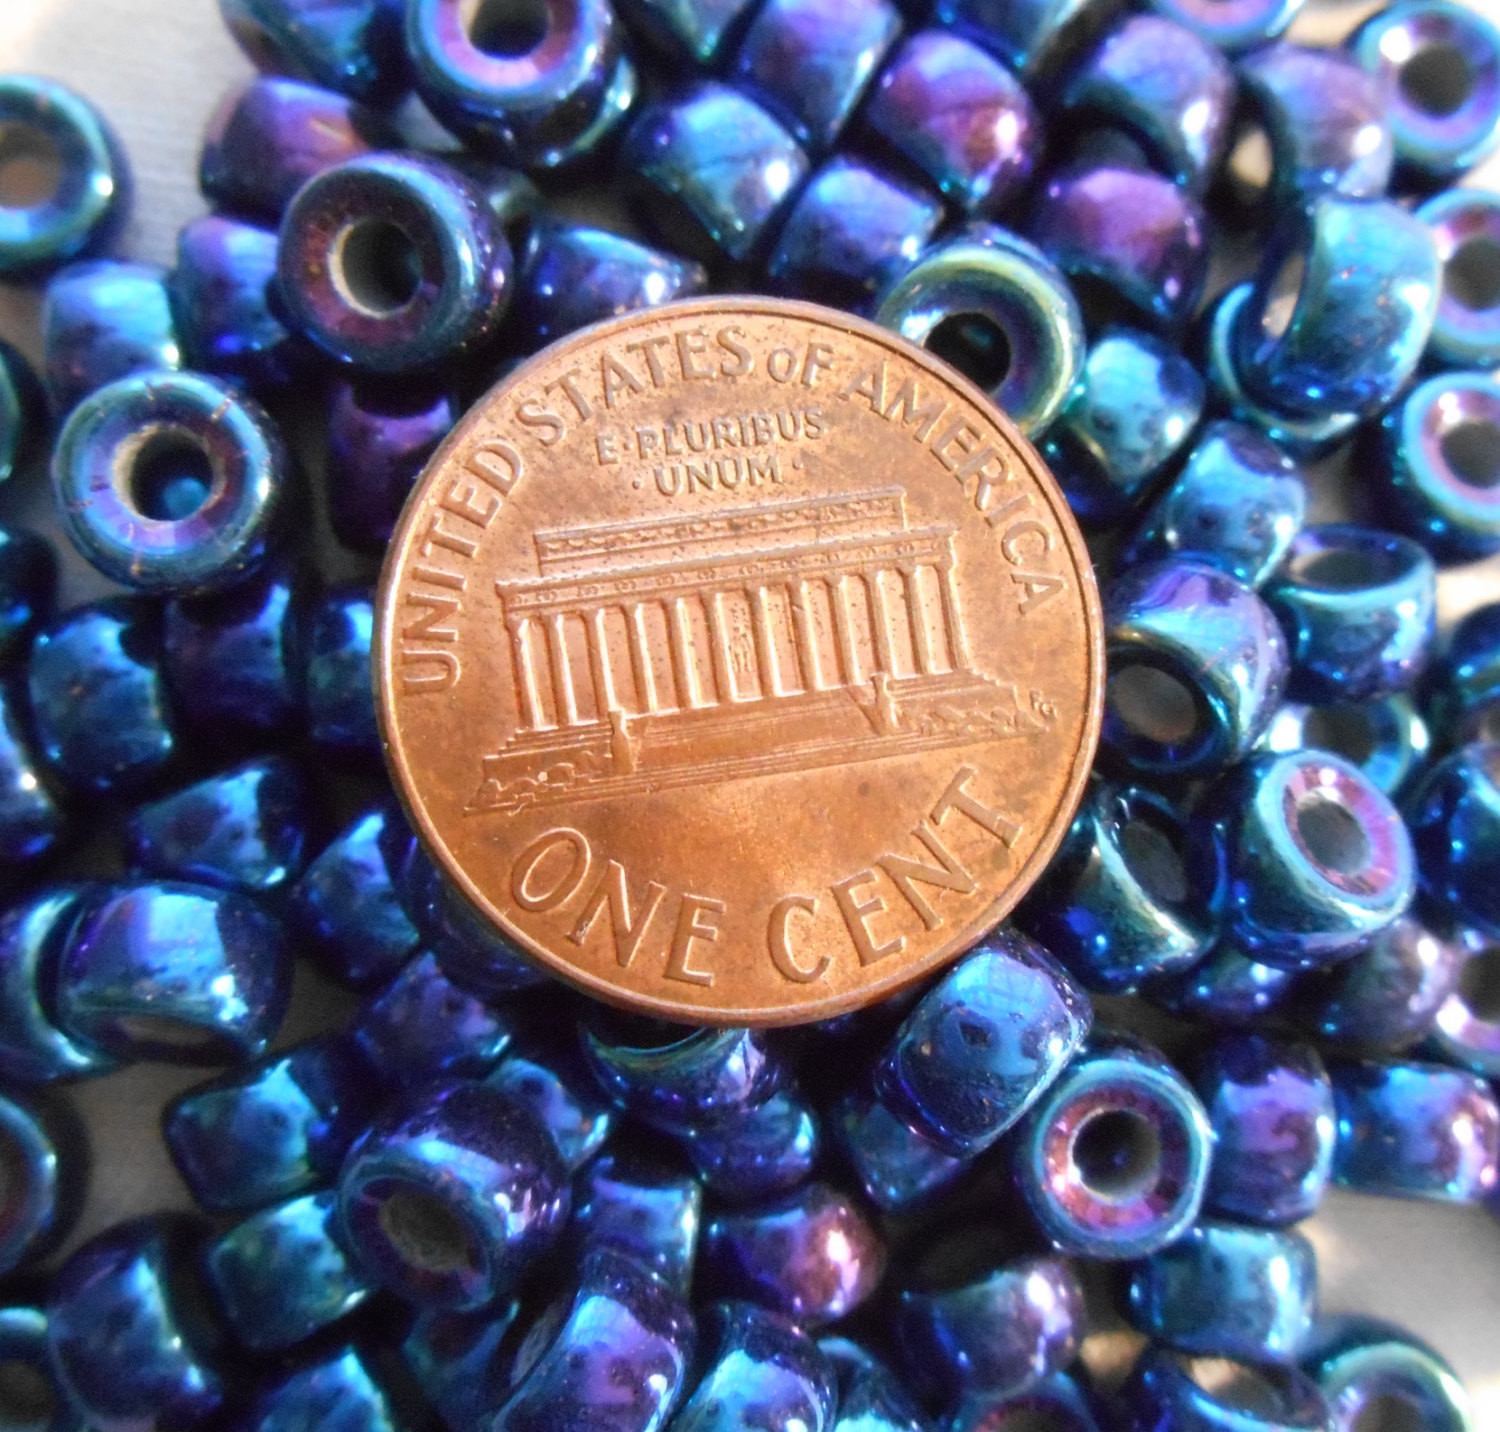 50 Vintage Pink Pony Beads. 9x6mm Czech Glass Roller Macrame Beads. CZ-514  